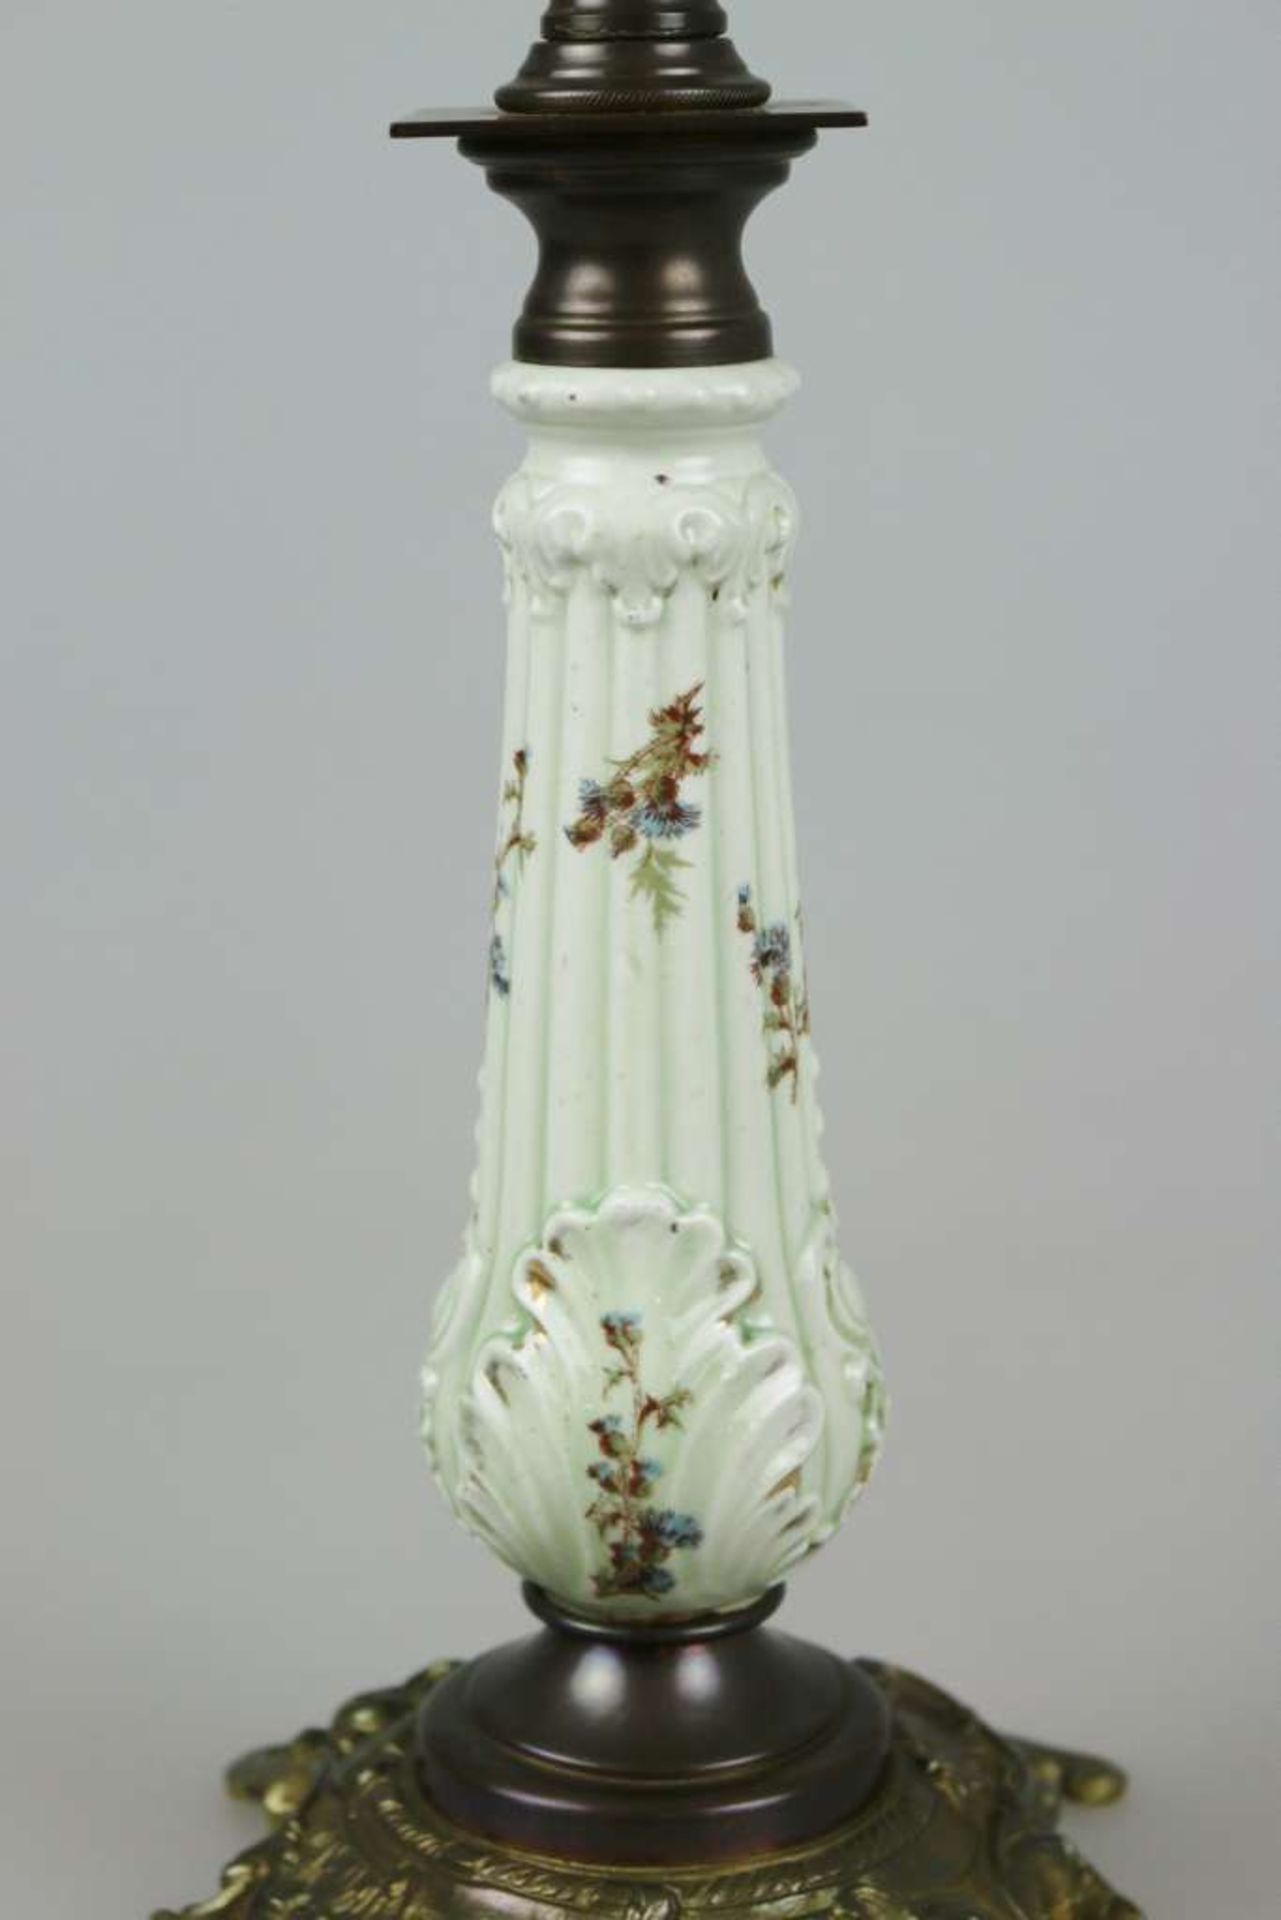 Petroleumlampe, 1. H. 20. Jh., Tank aus farblosem, facettiertem Glas, Diffusor mit - Bild 2 aus 2